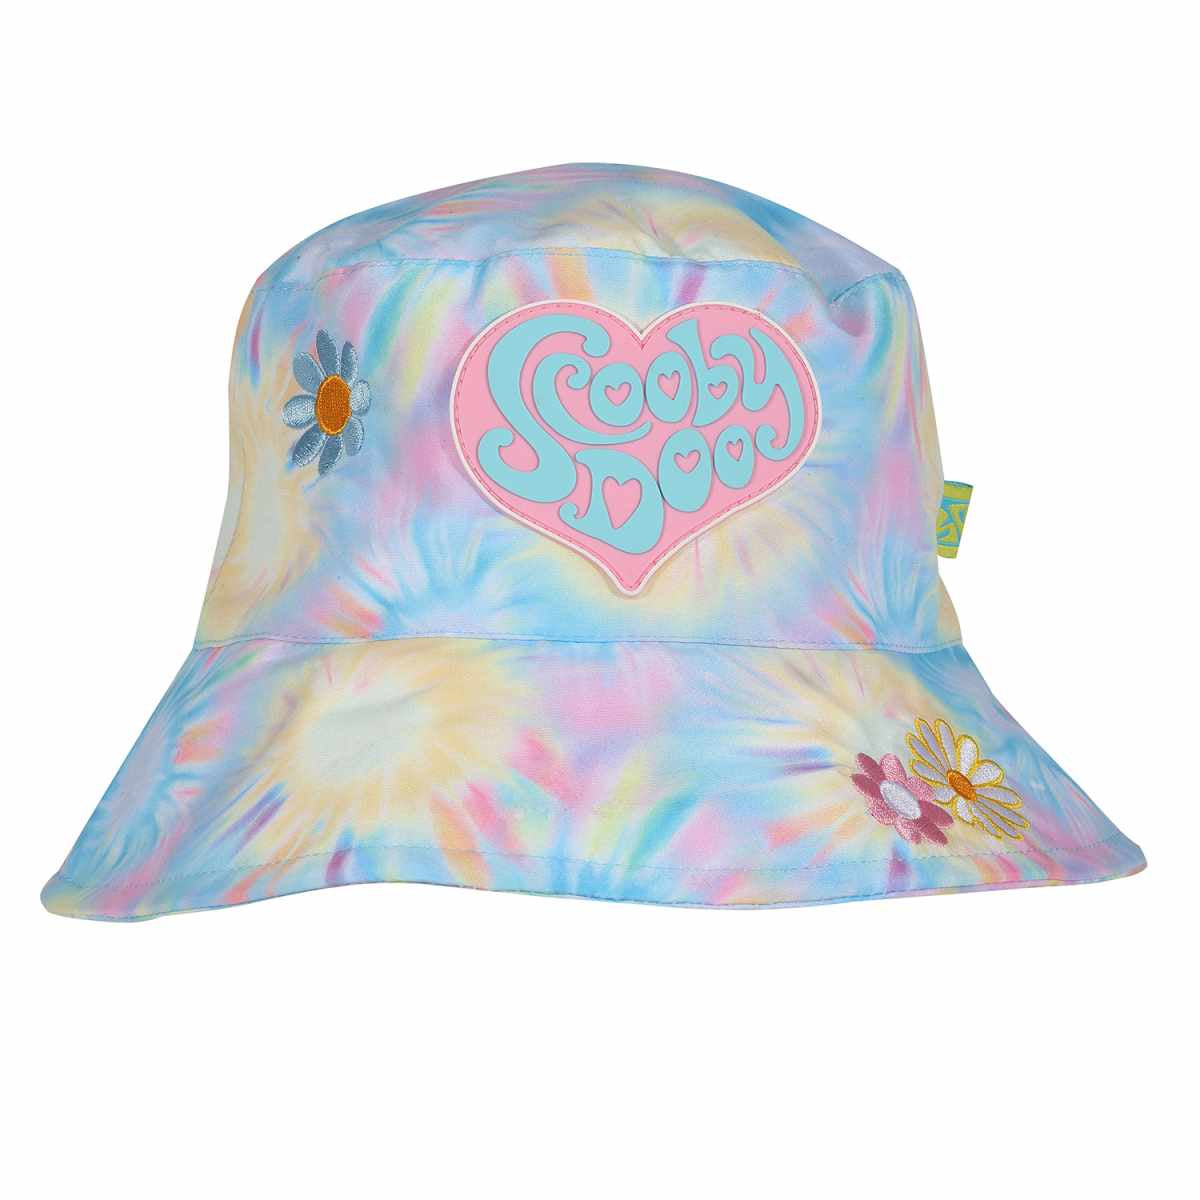 SCOOBY DOO - Bright Tie Dye Bucket Hat